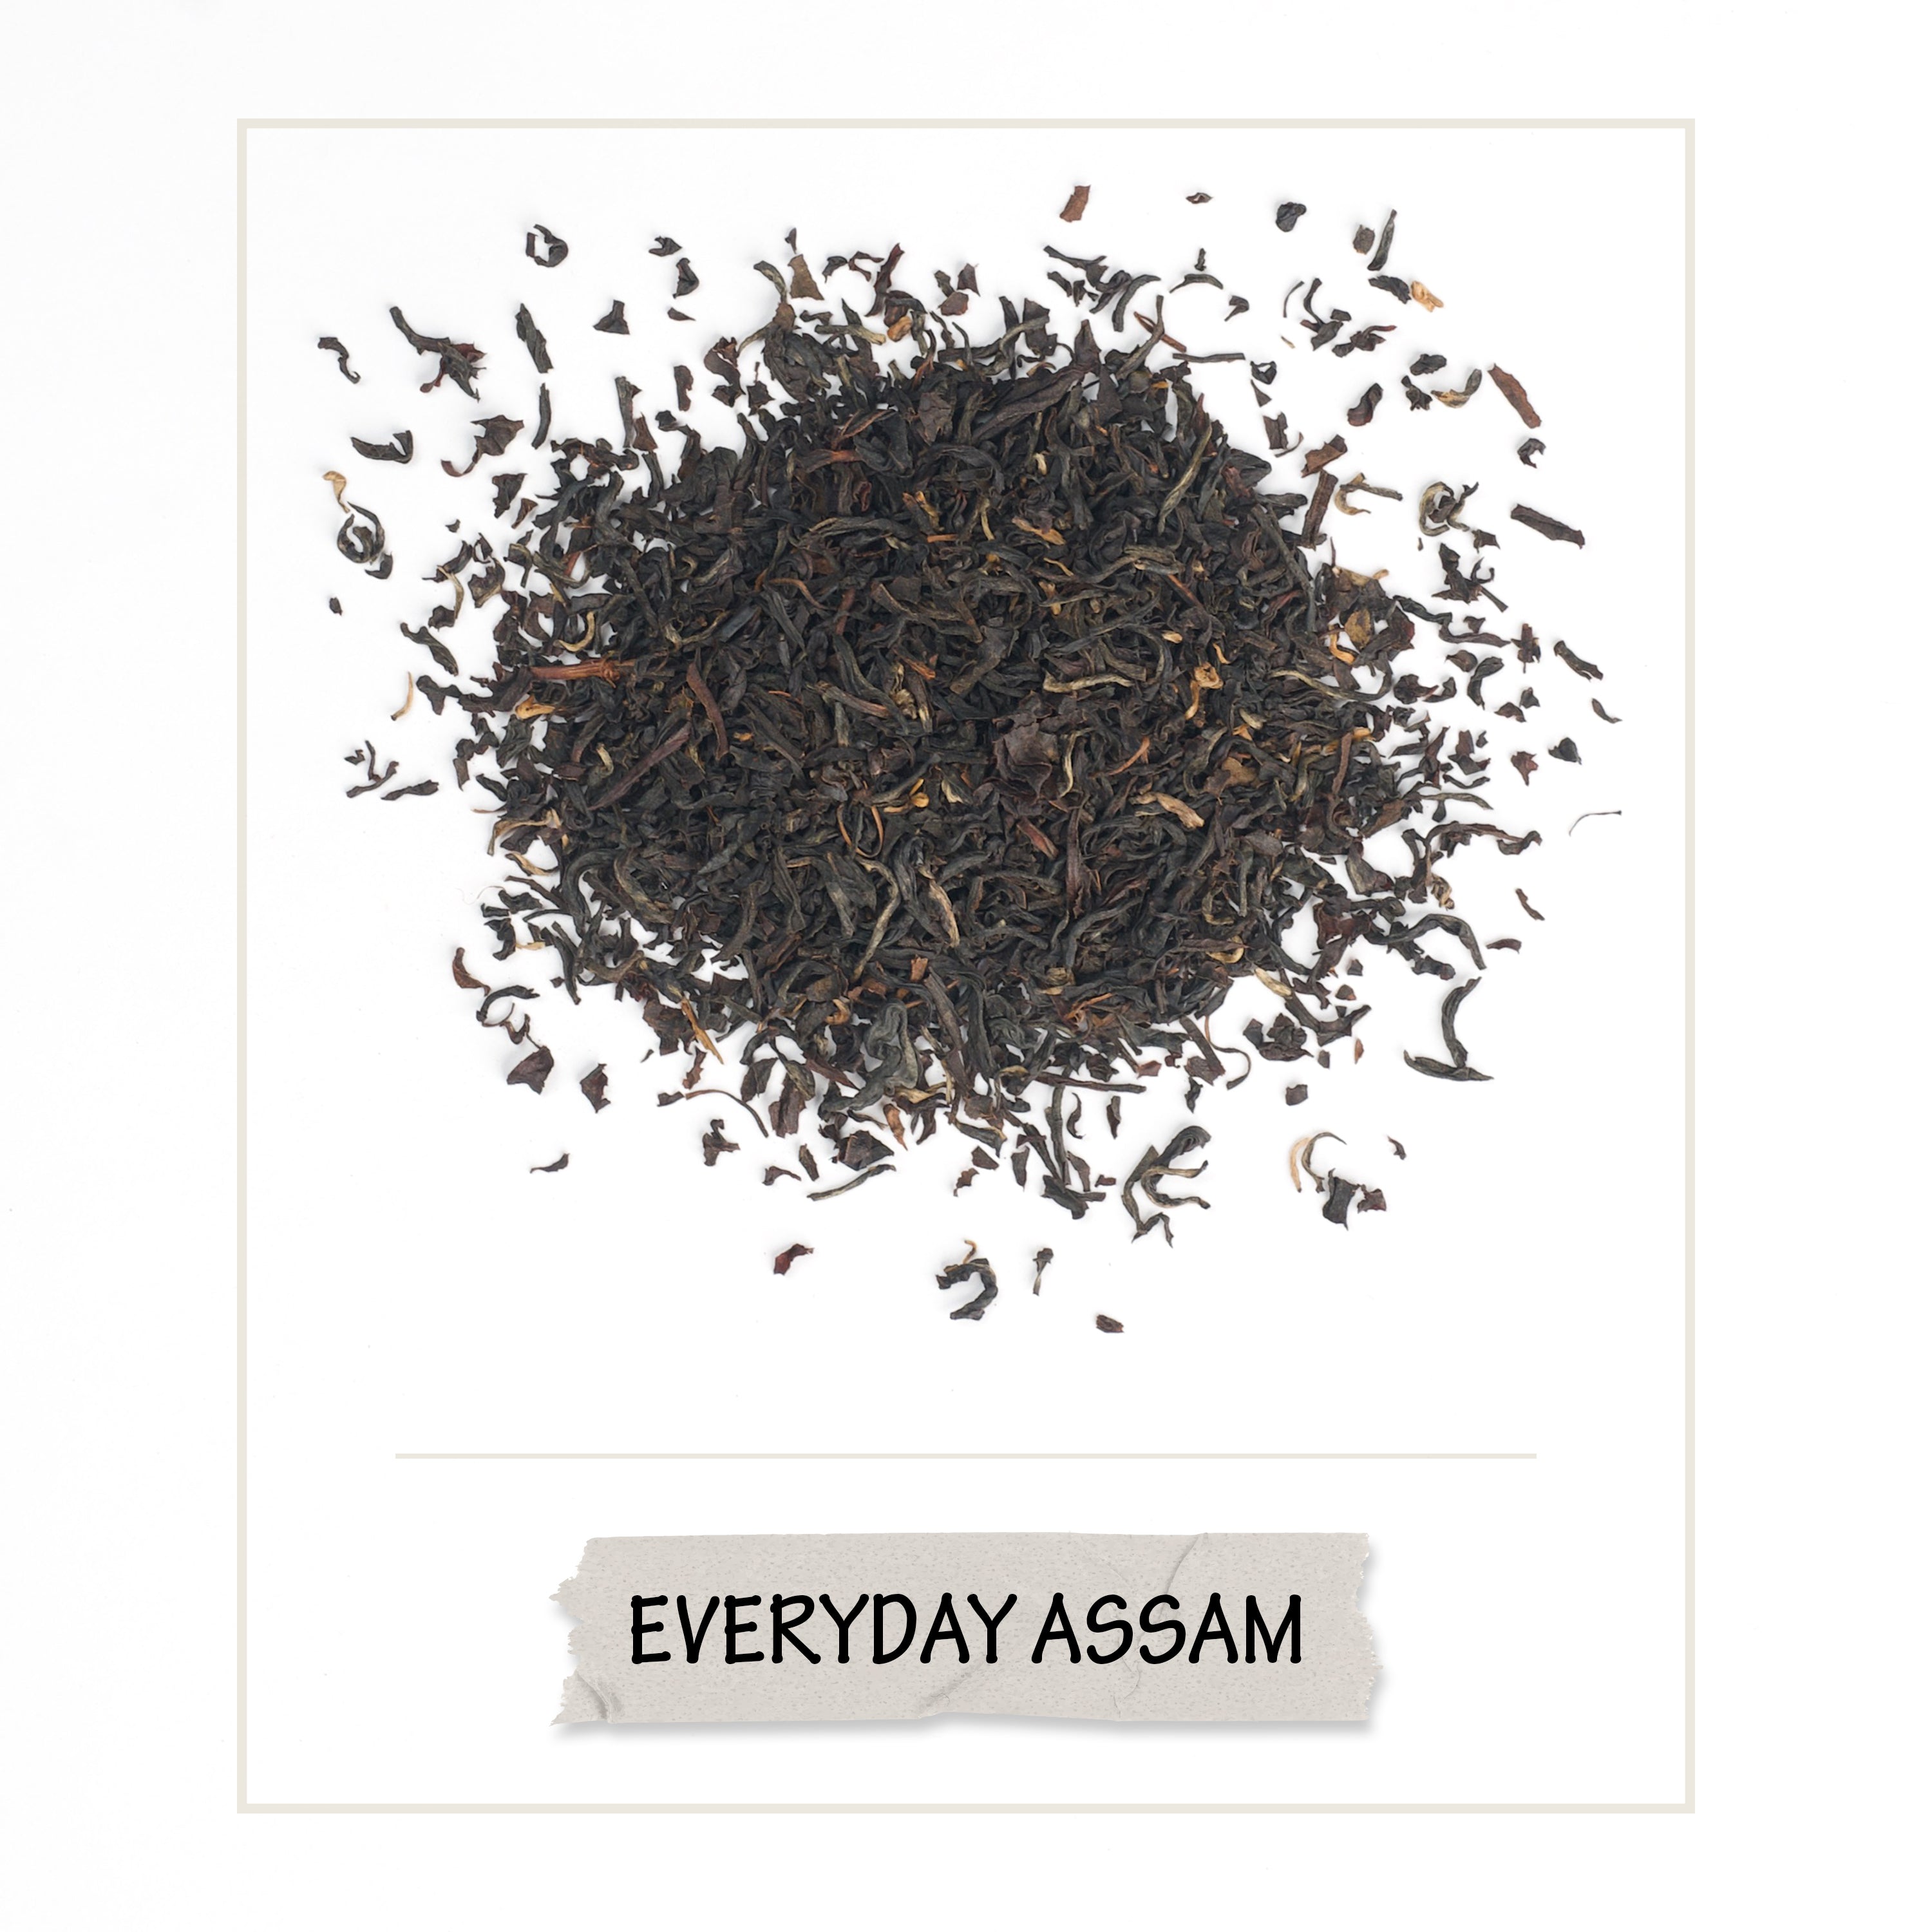 Assam Black Tea, 3.53 oz Loose Tea